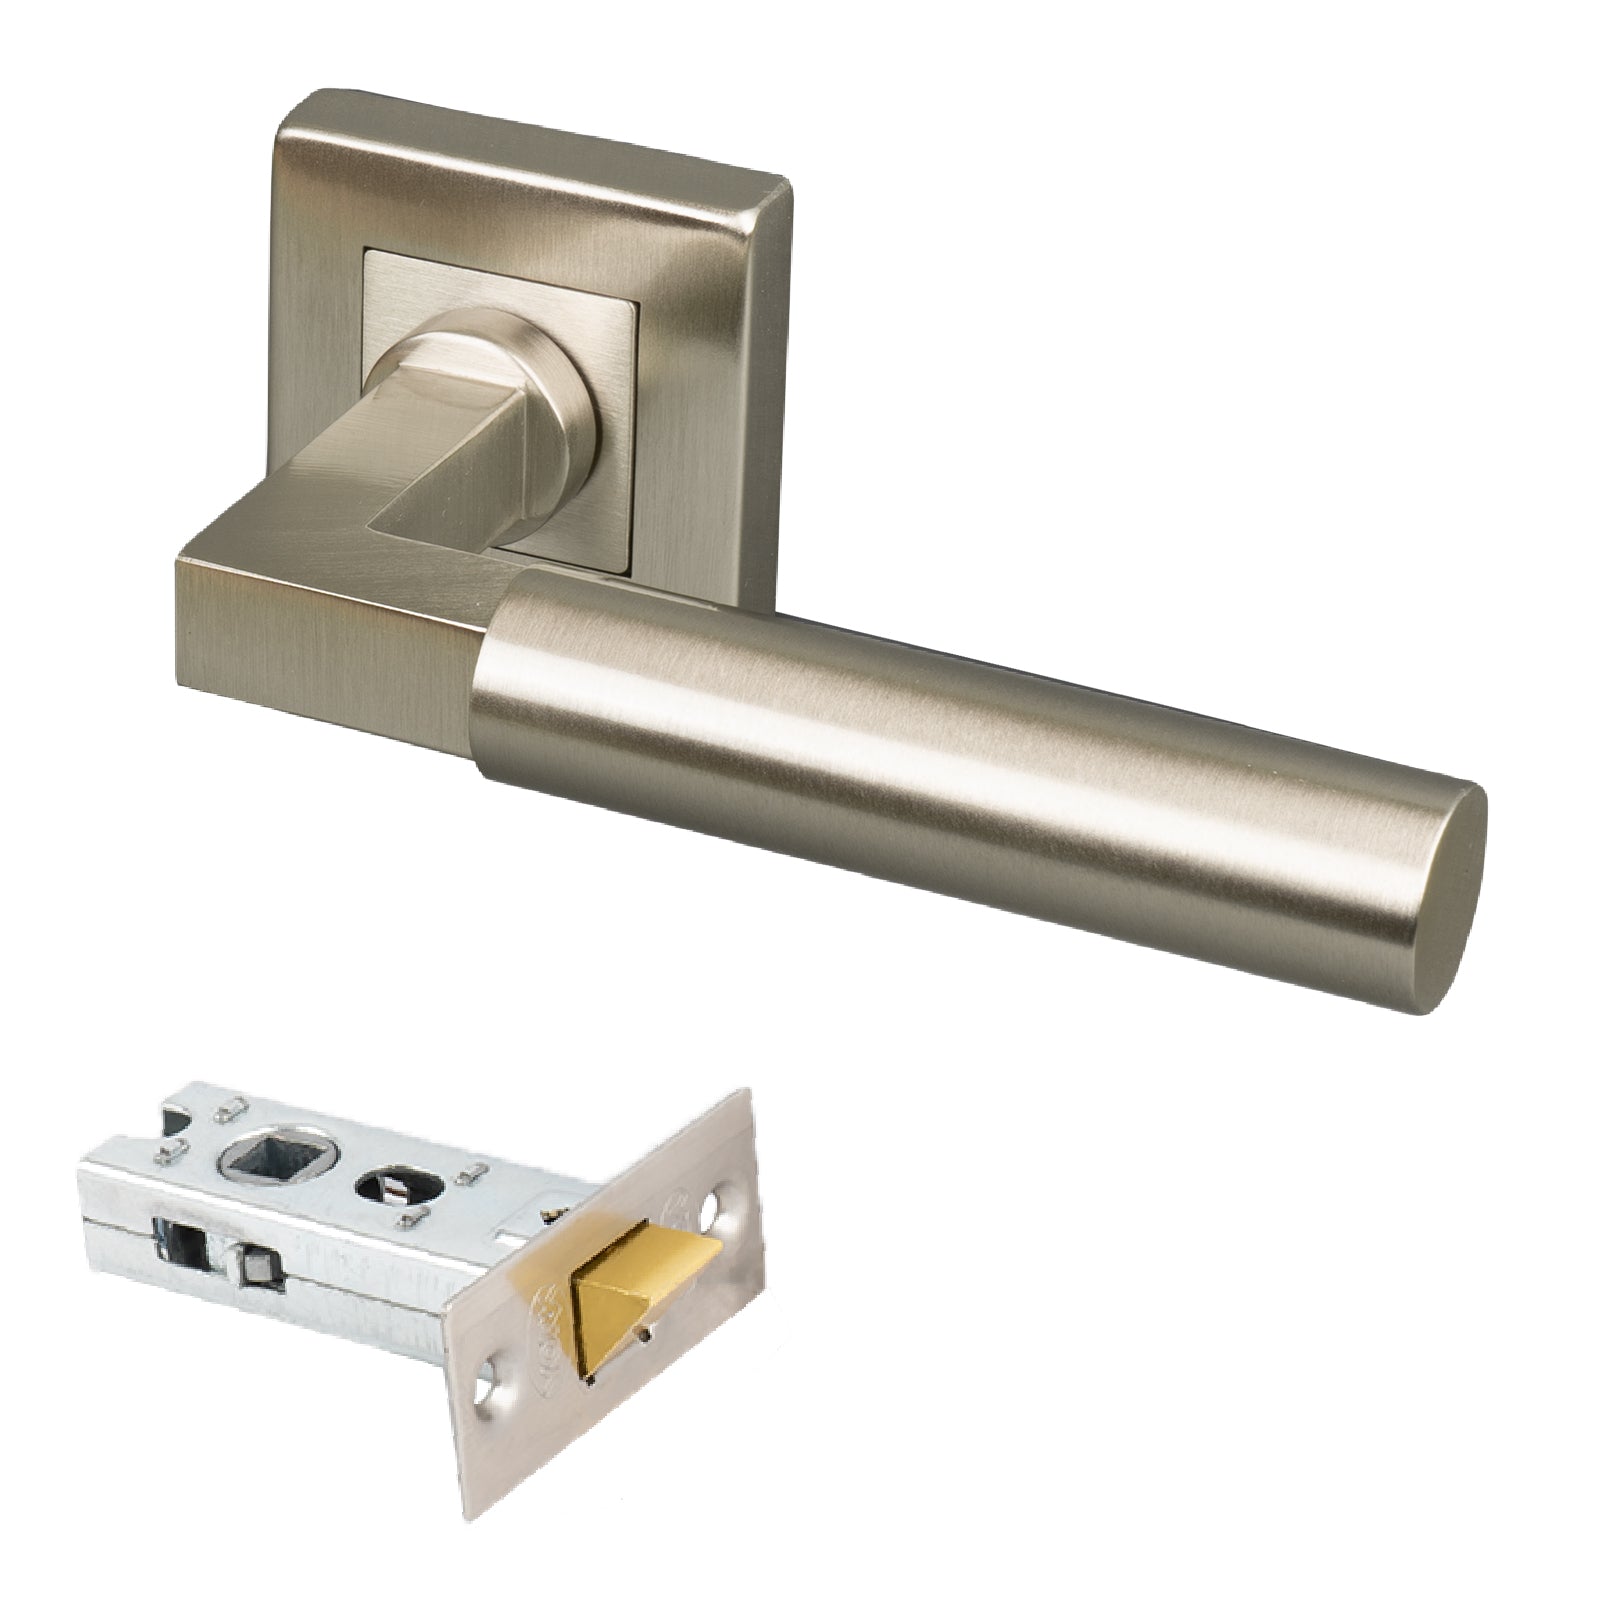 Satin Nickel square rose door handles latch set, 2.5 inch latch and handles